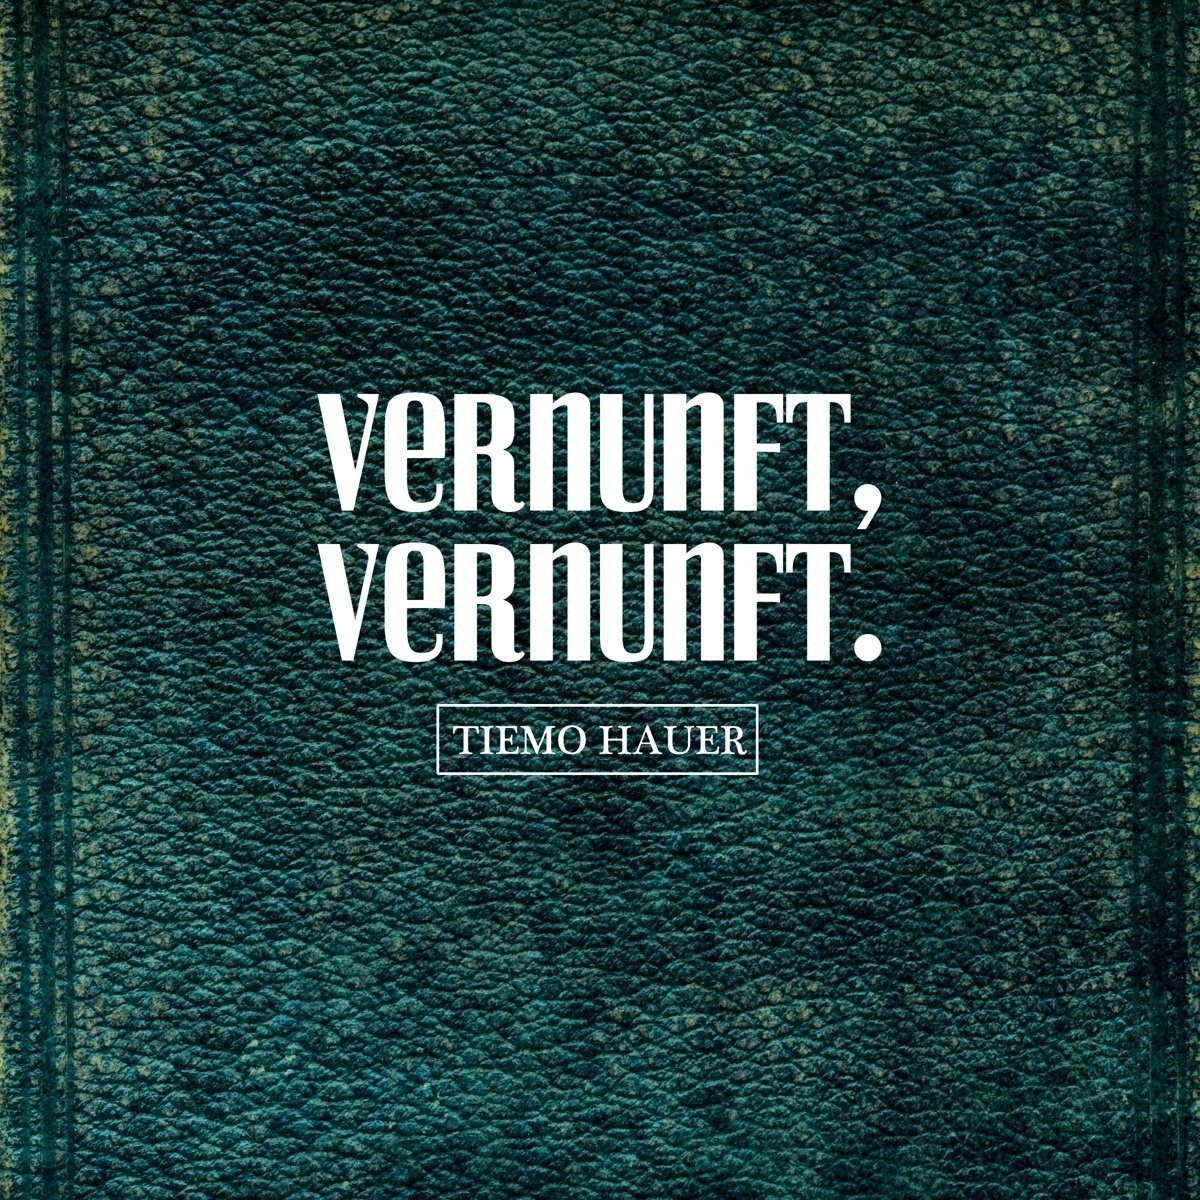 Vernunft  Vernunft. - Tiemo Hauer. (CD)